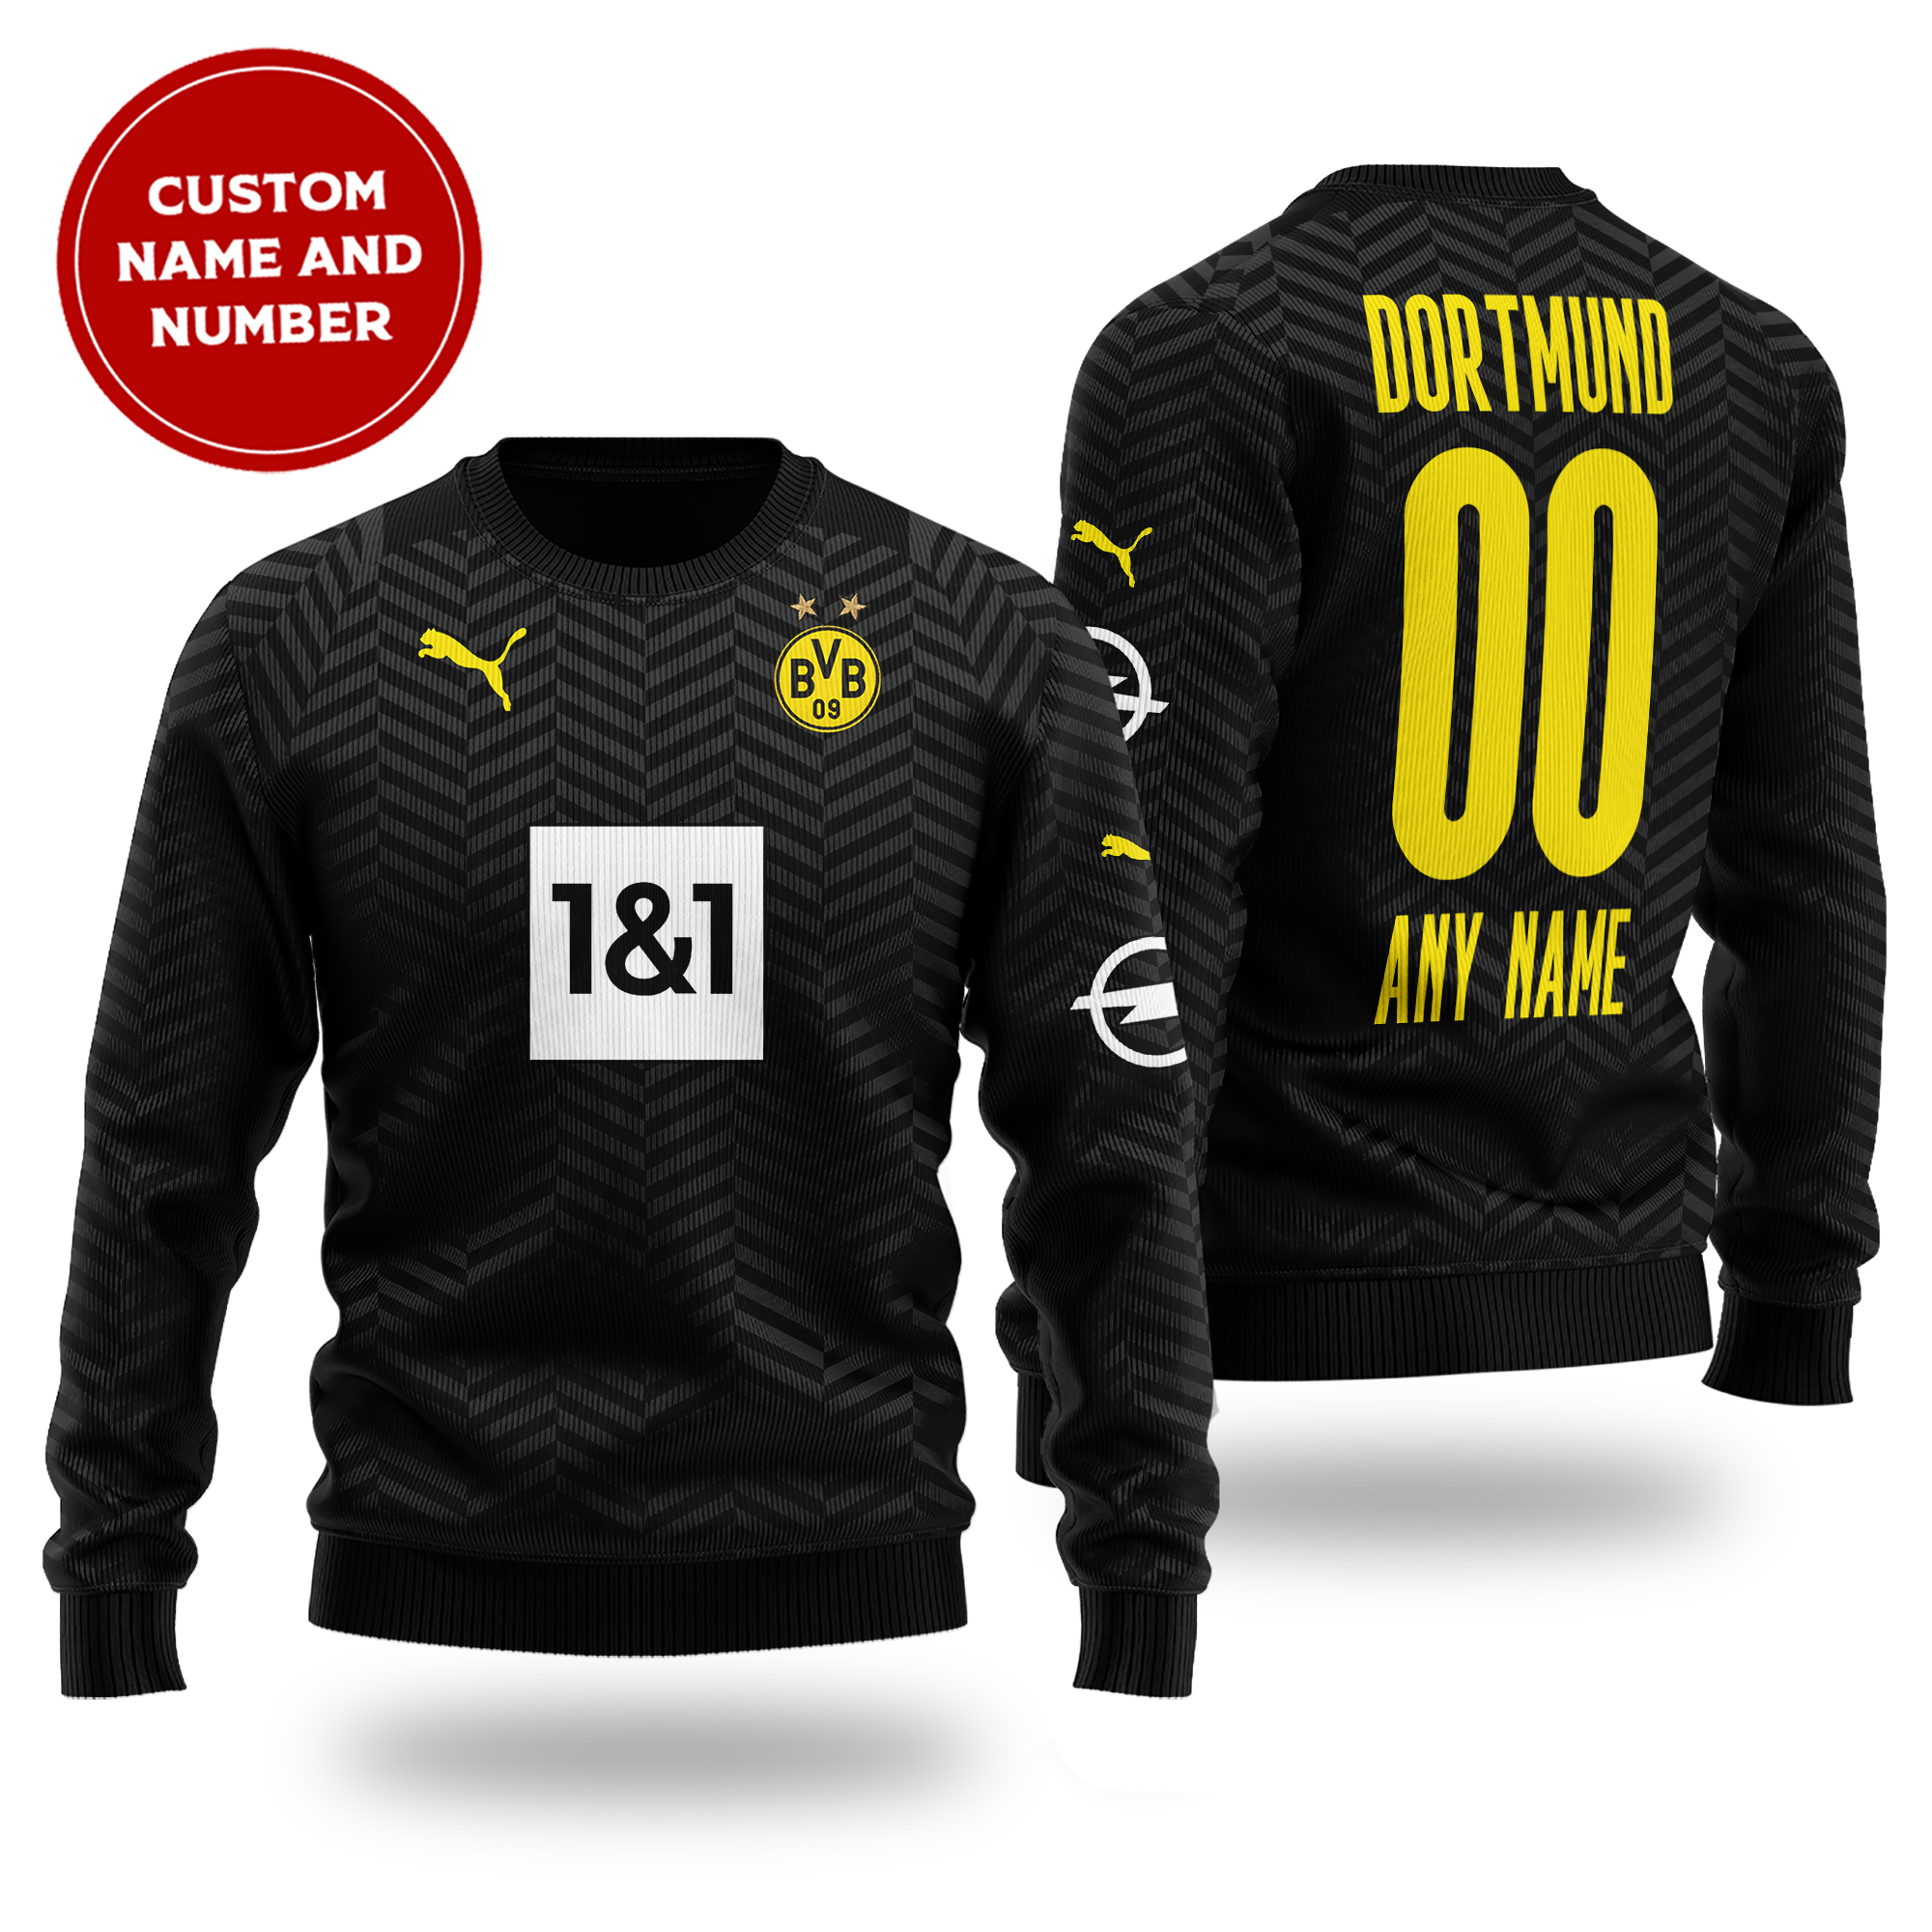 [ Amazing ] Bundesliga Borussia Dortmund FC away kit cutom name and number sweater – Saleoff 261121